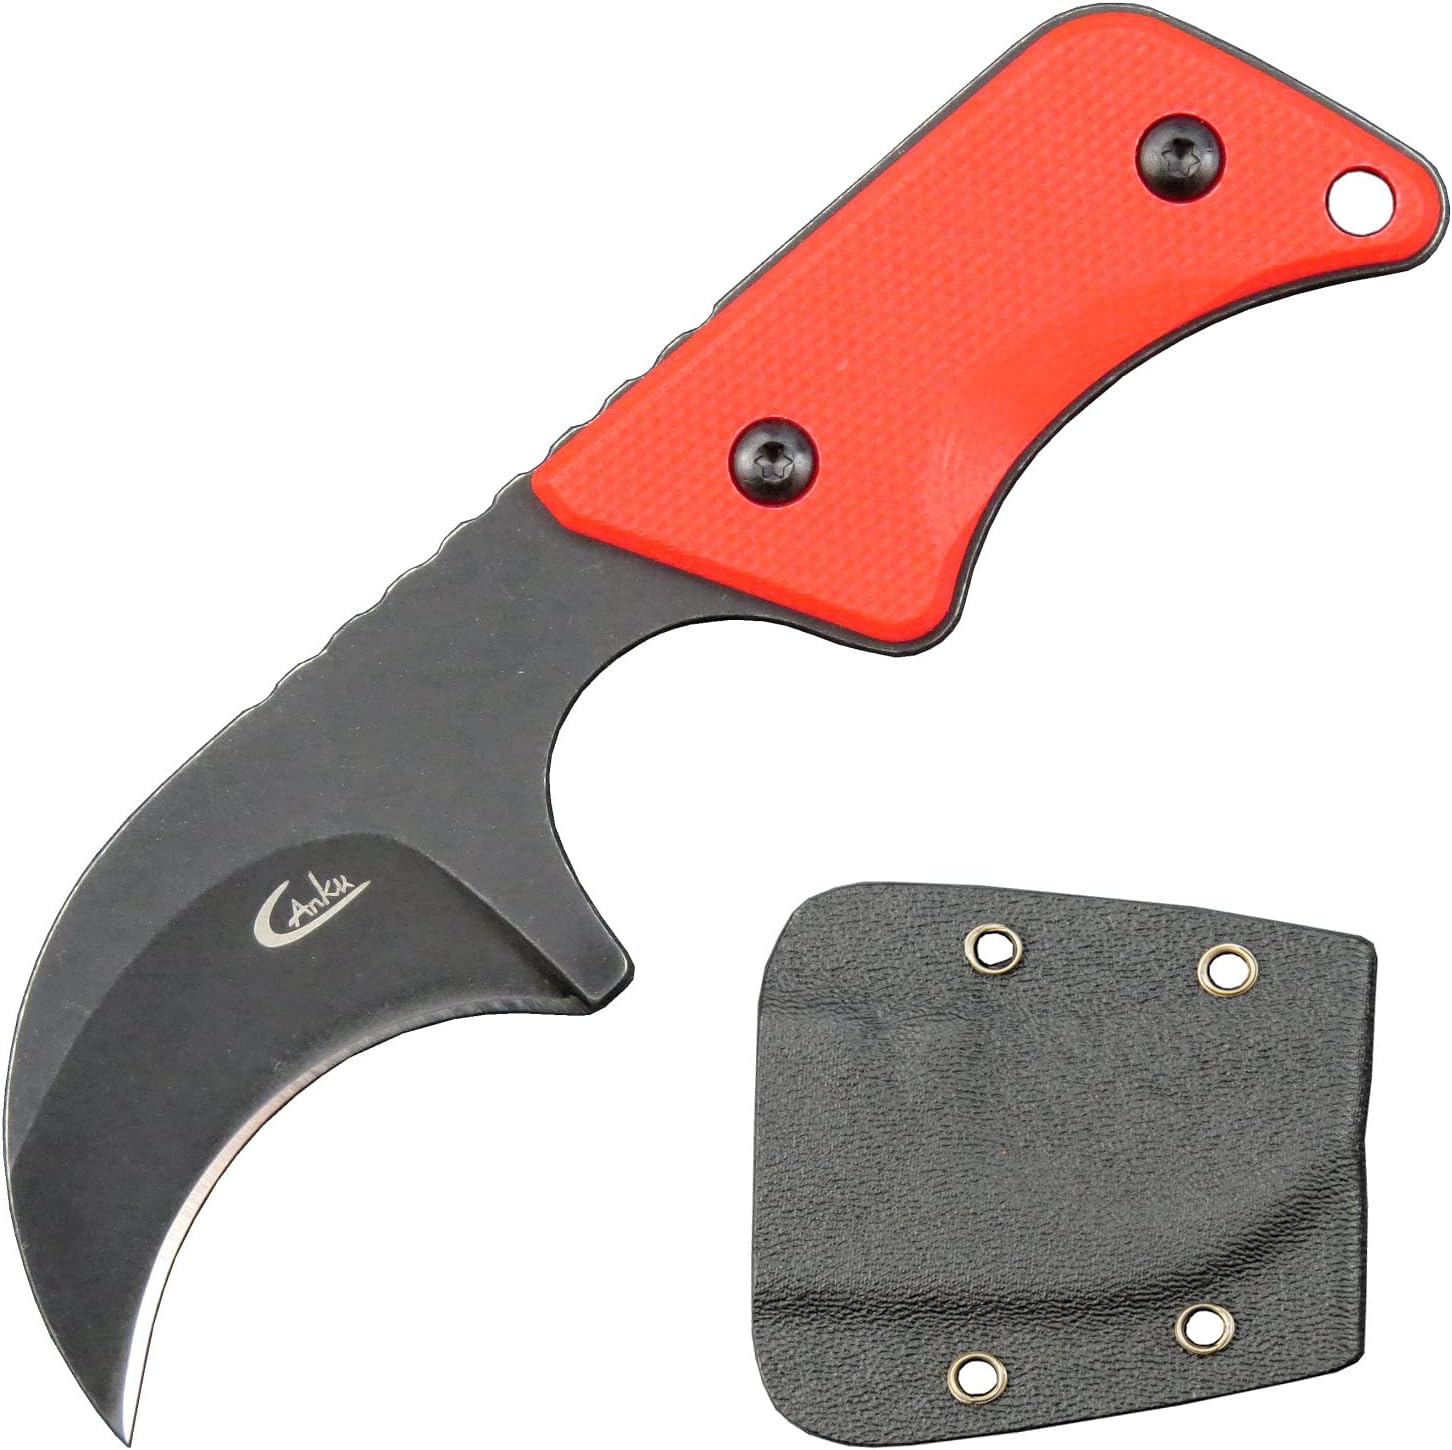 Wholesale Ccanku C1294 Fixed Blade Knife,9Cr18Mov Blade G10 Handle